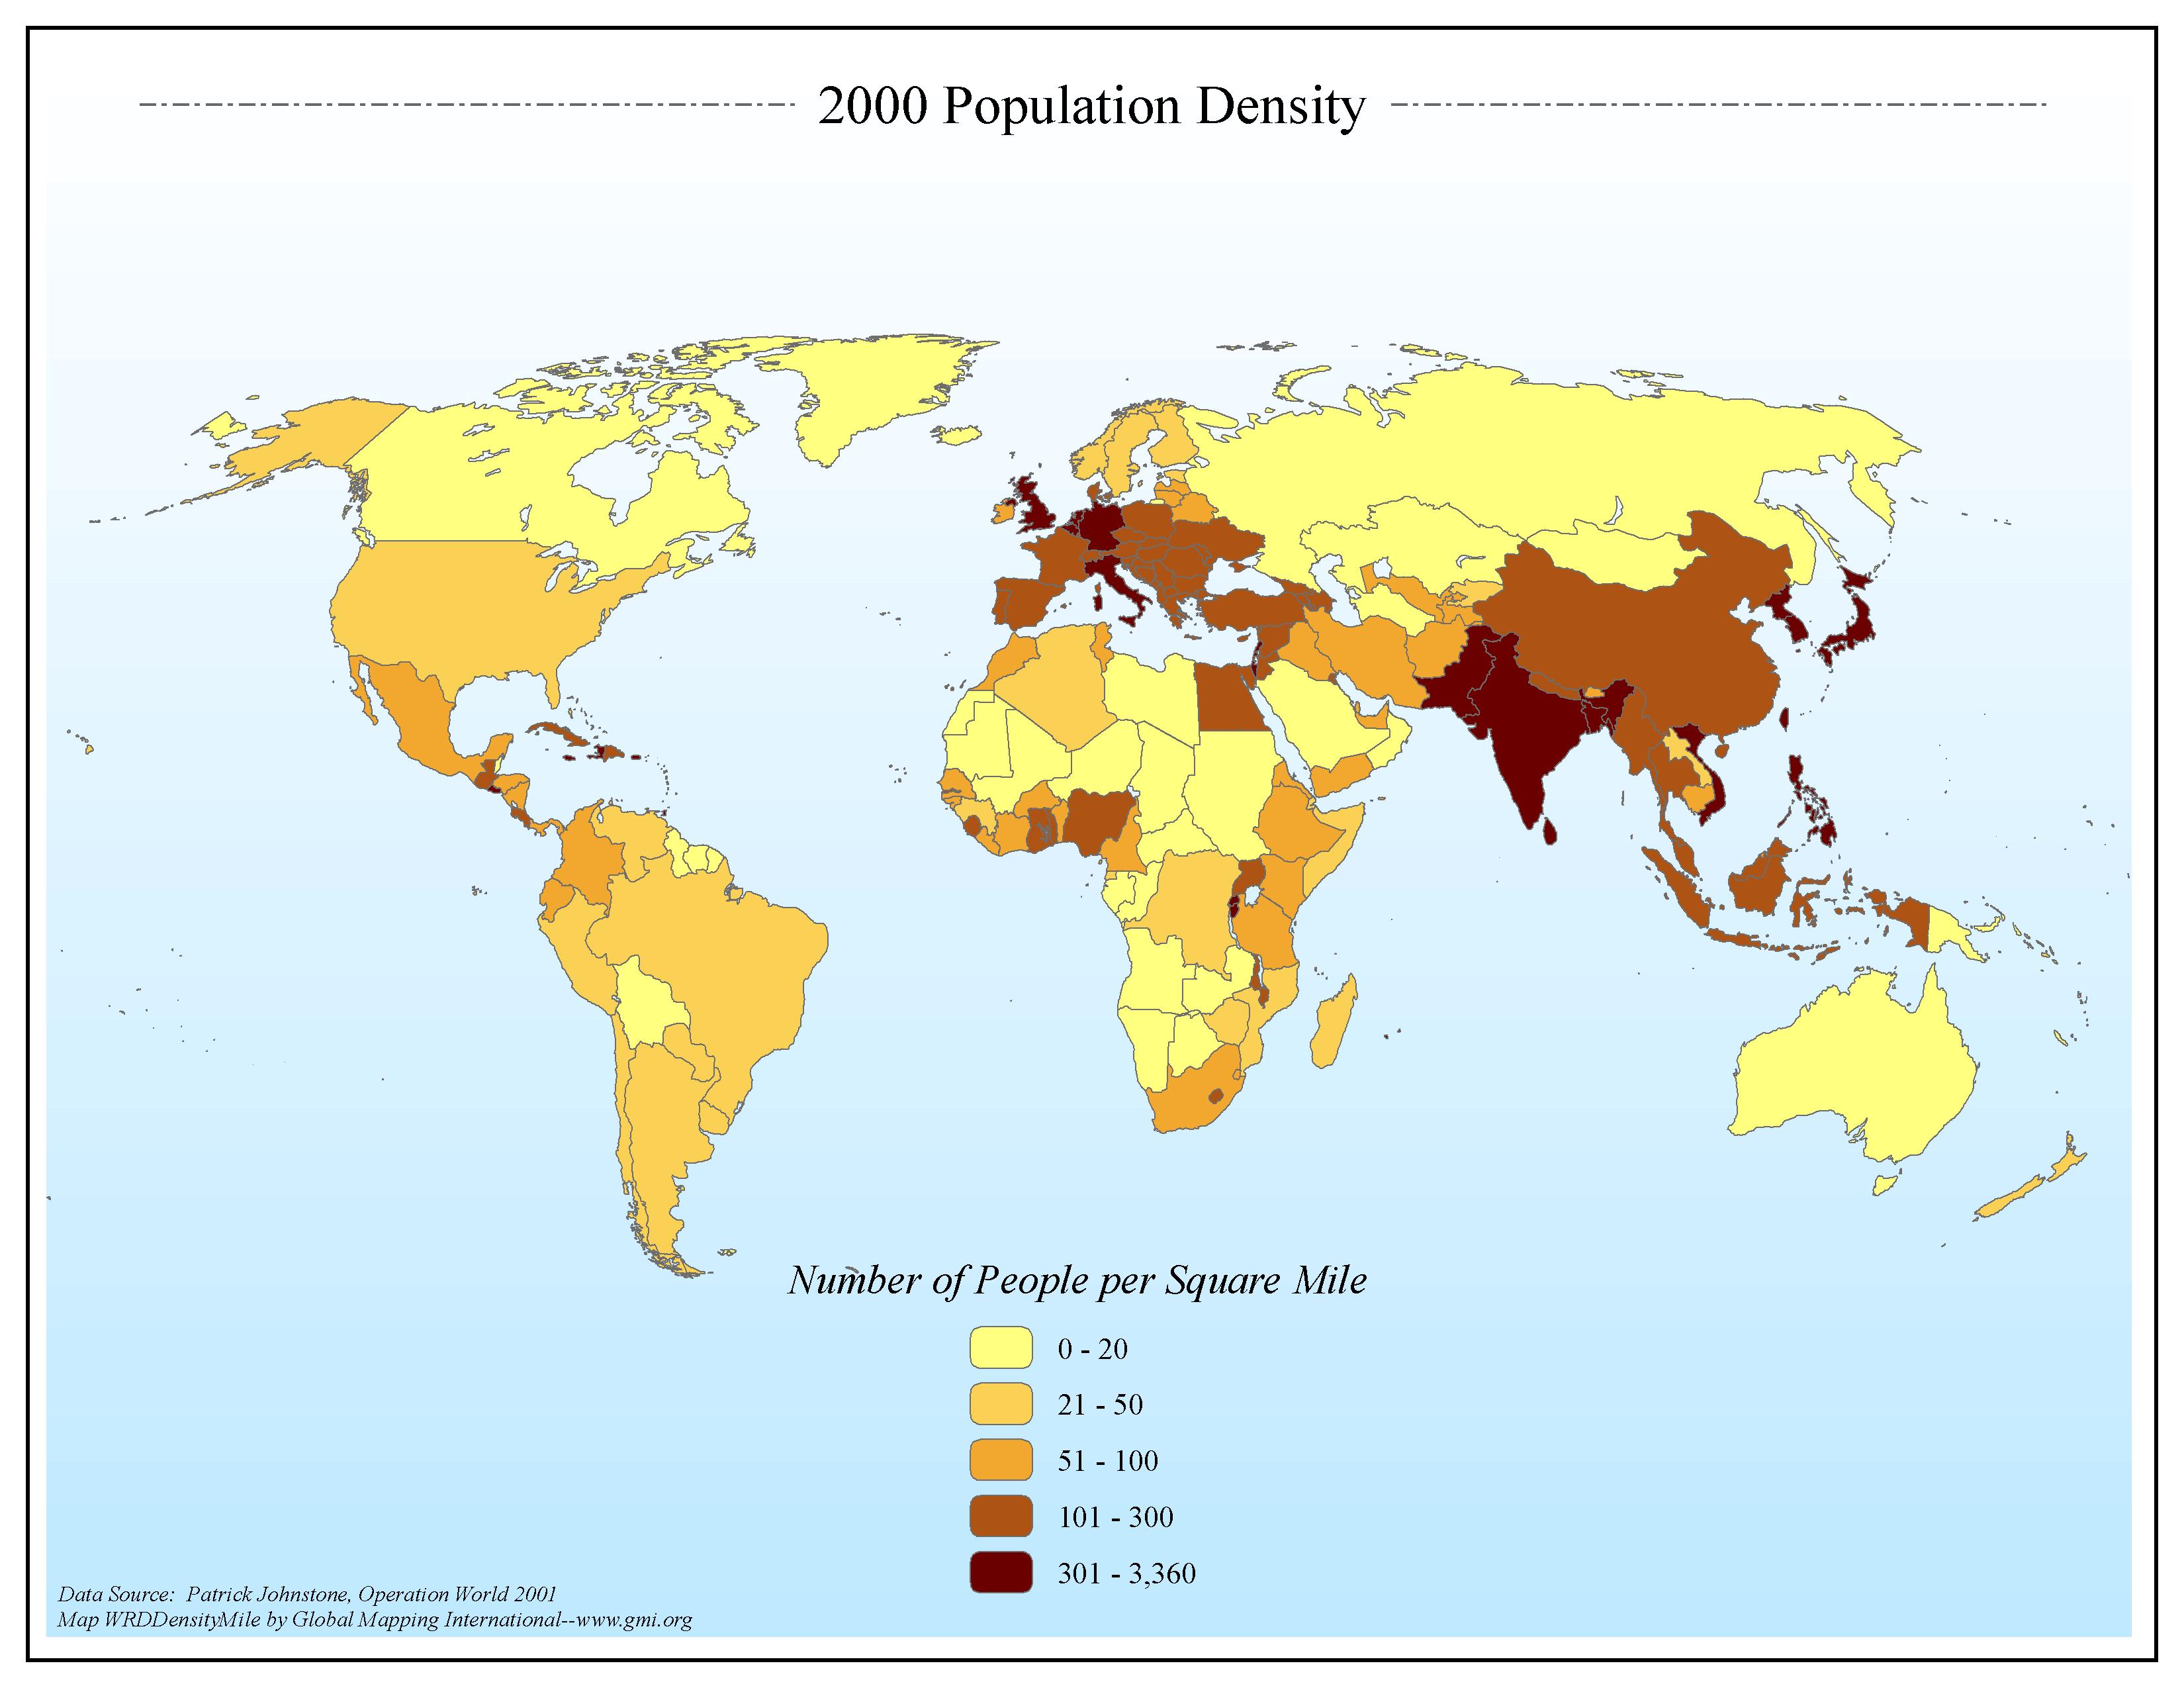 2000 Population Density per Square Mile